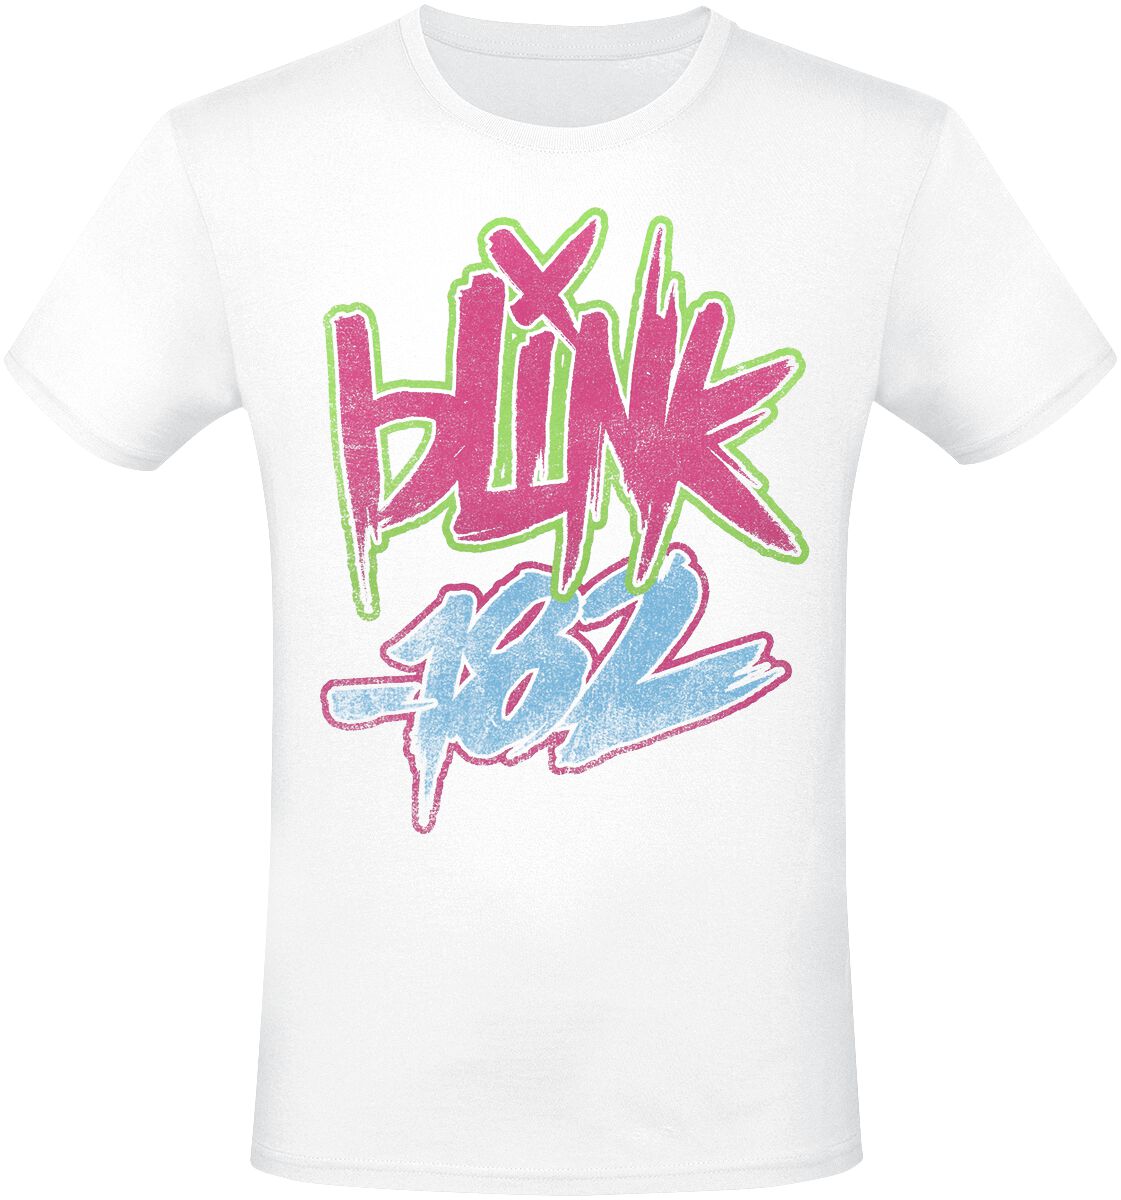 Blink-182 Text T-Shirt weiß in 3XL